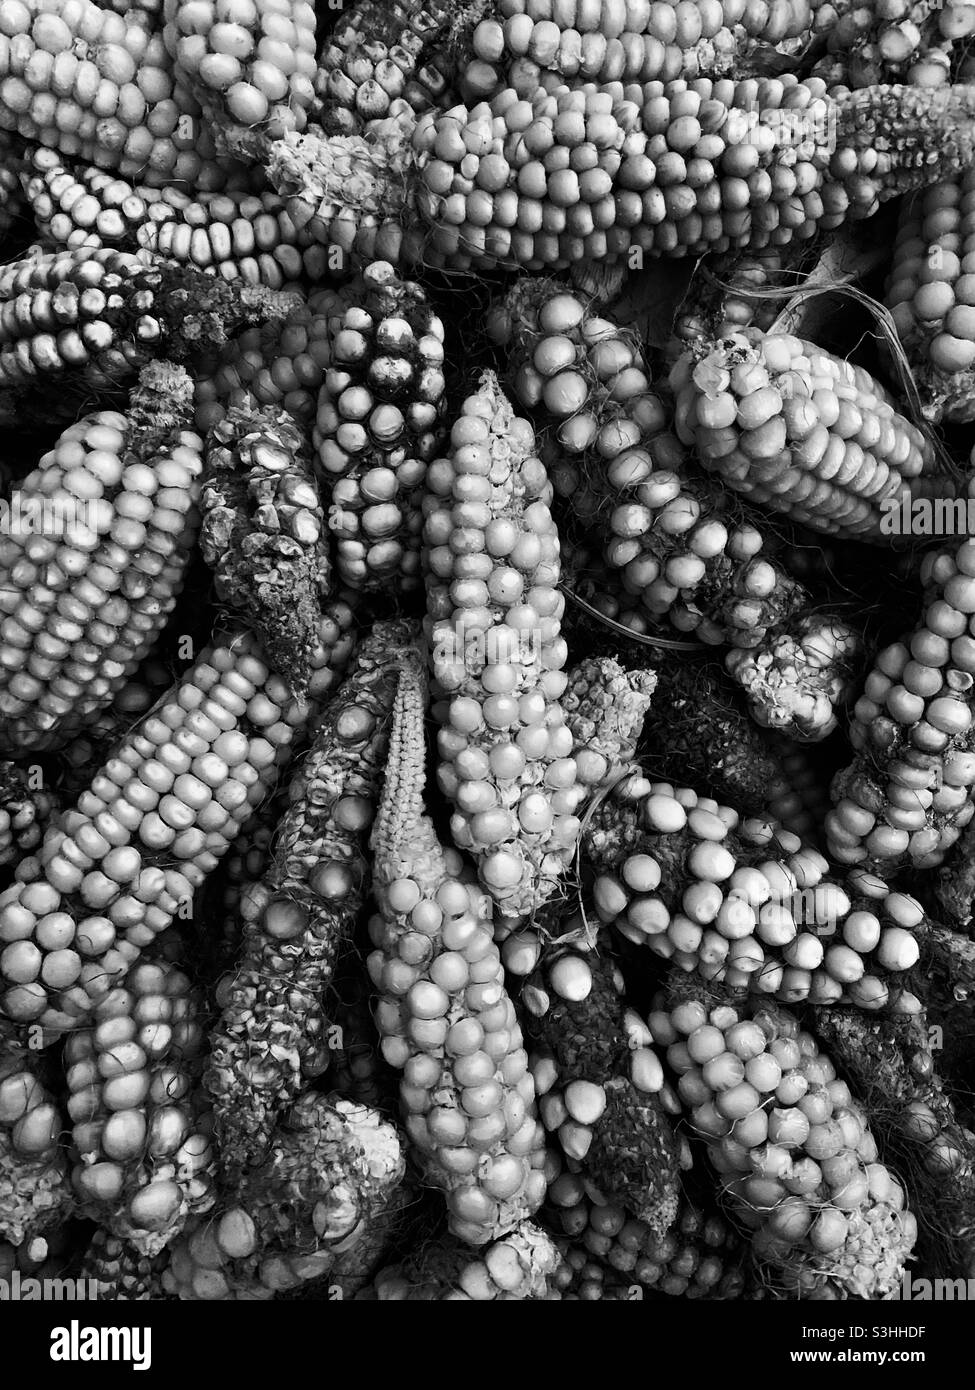 Corn Stock Photo